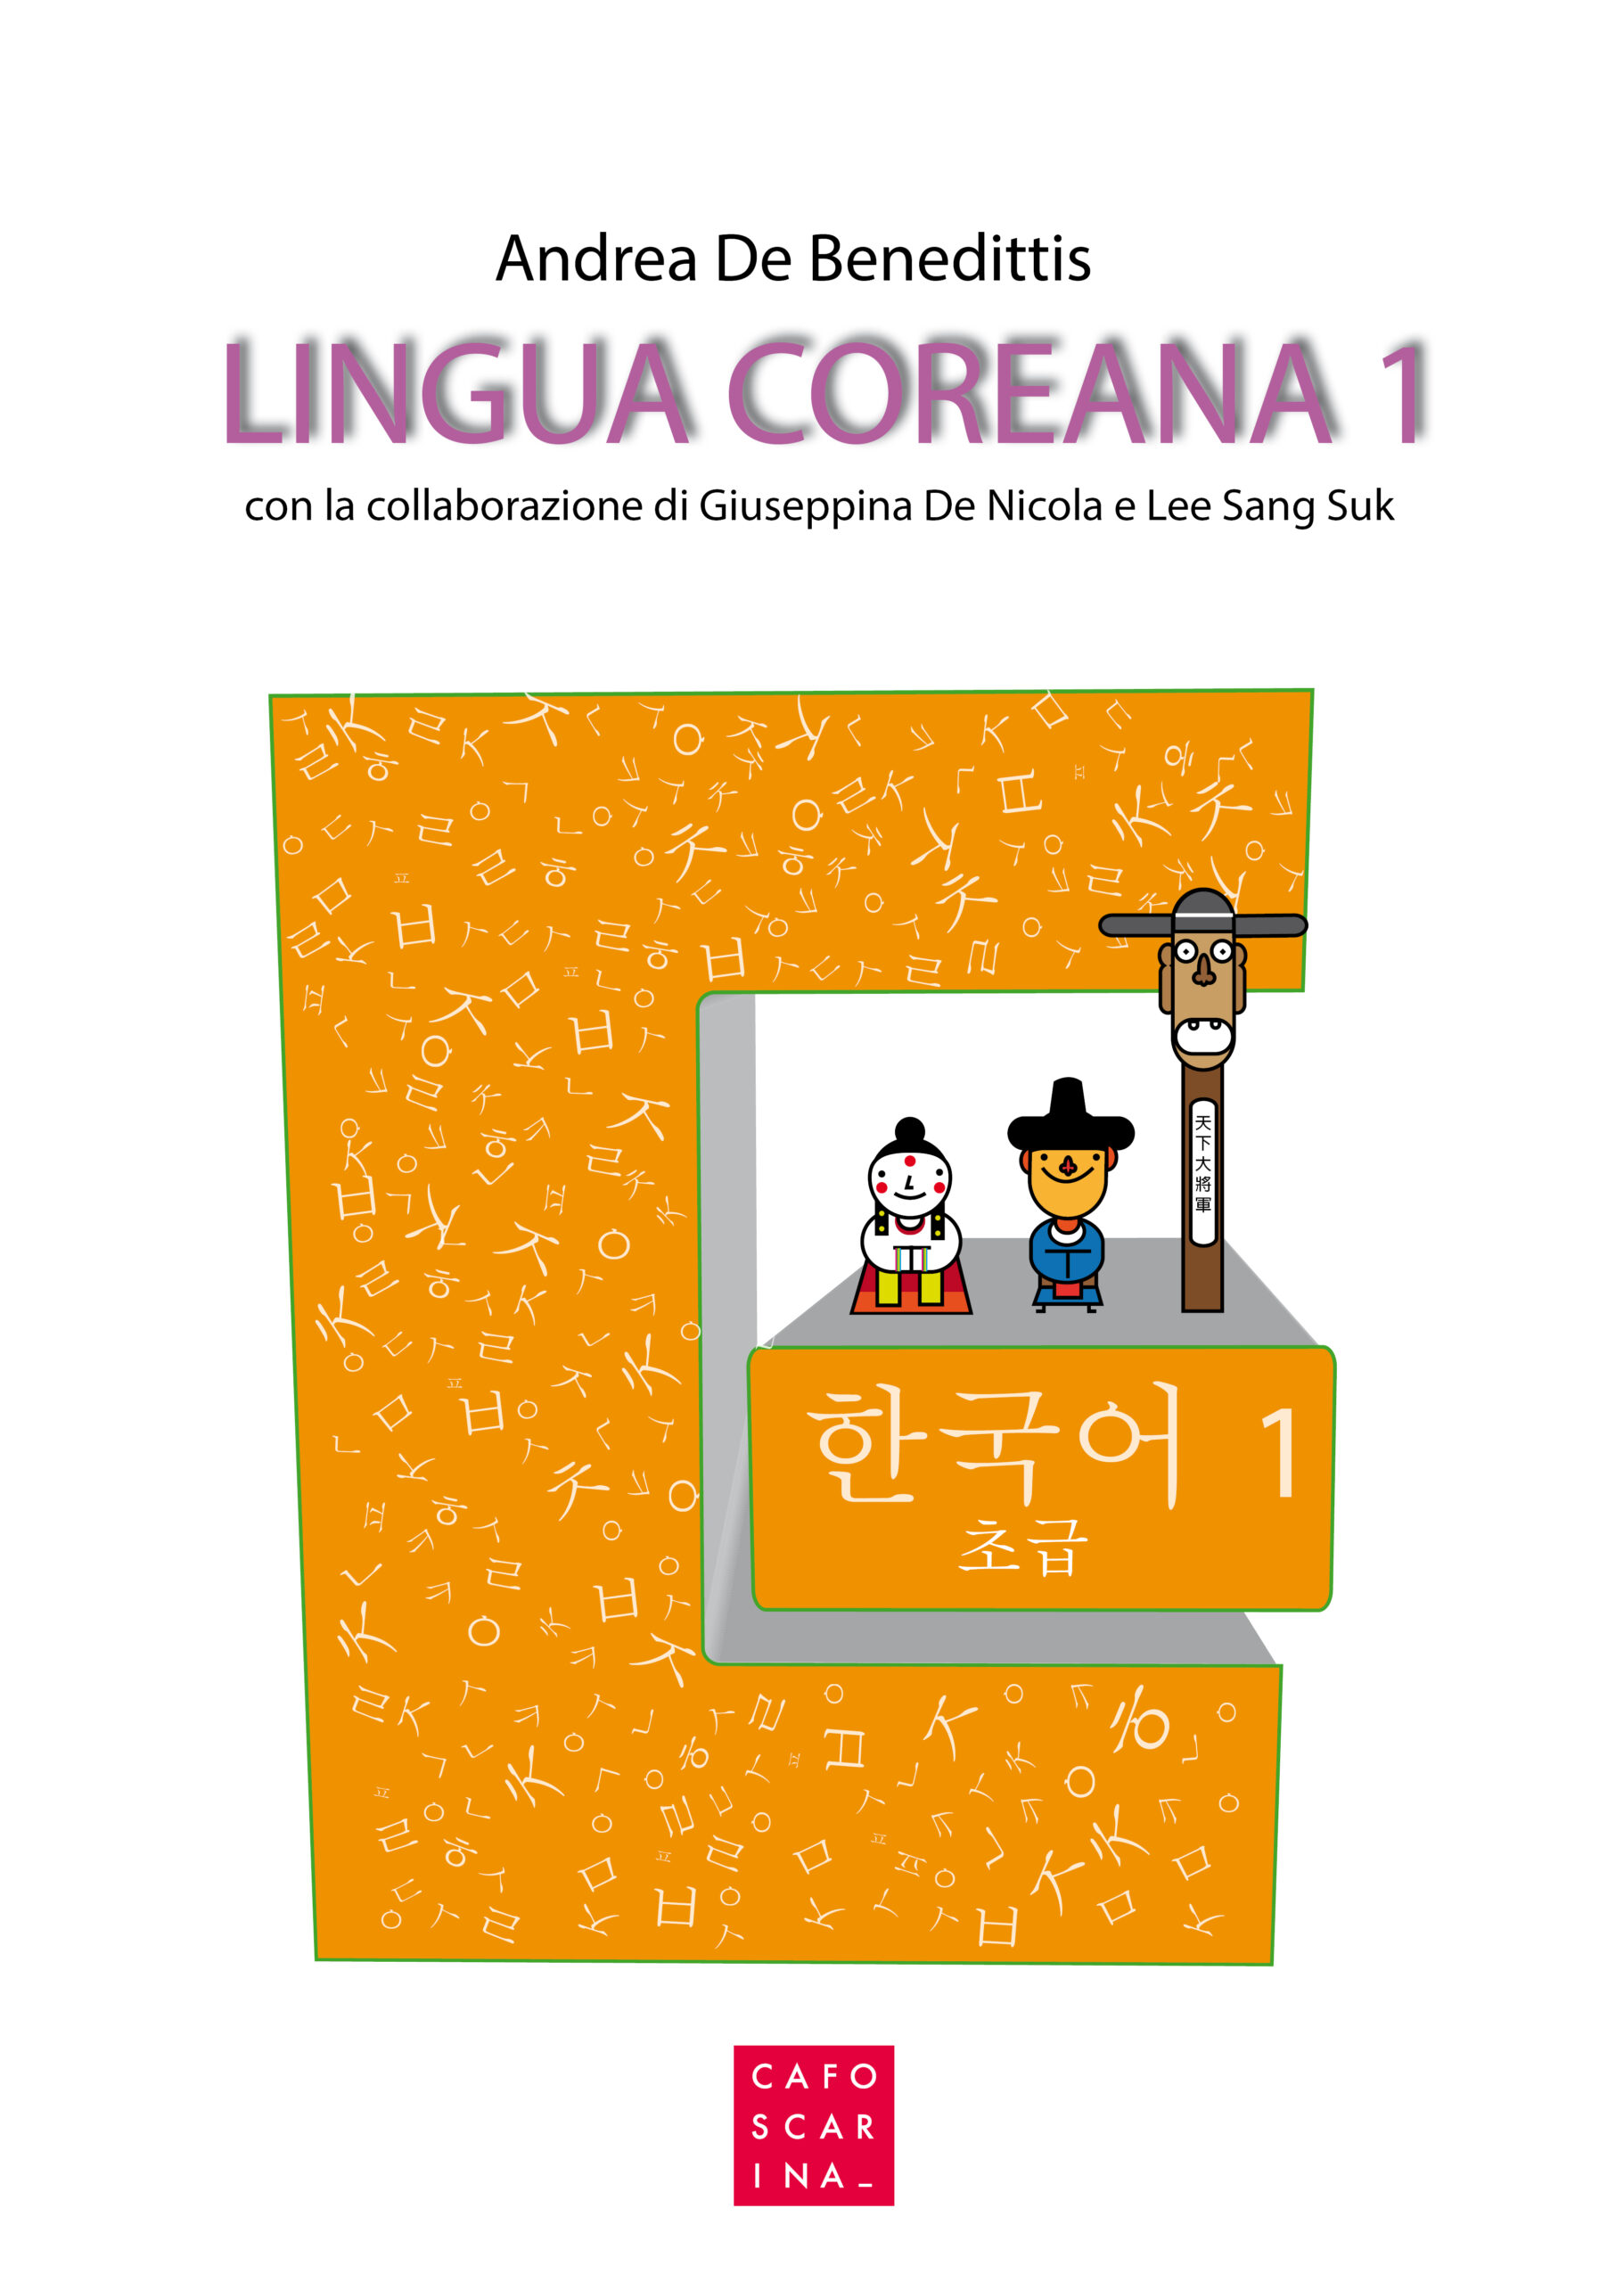 Gramática essencial coreana — nível 1, Keehwan Kim